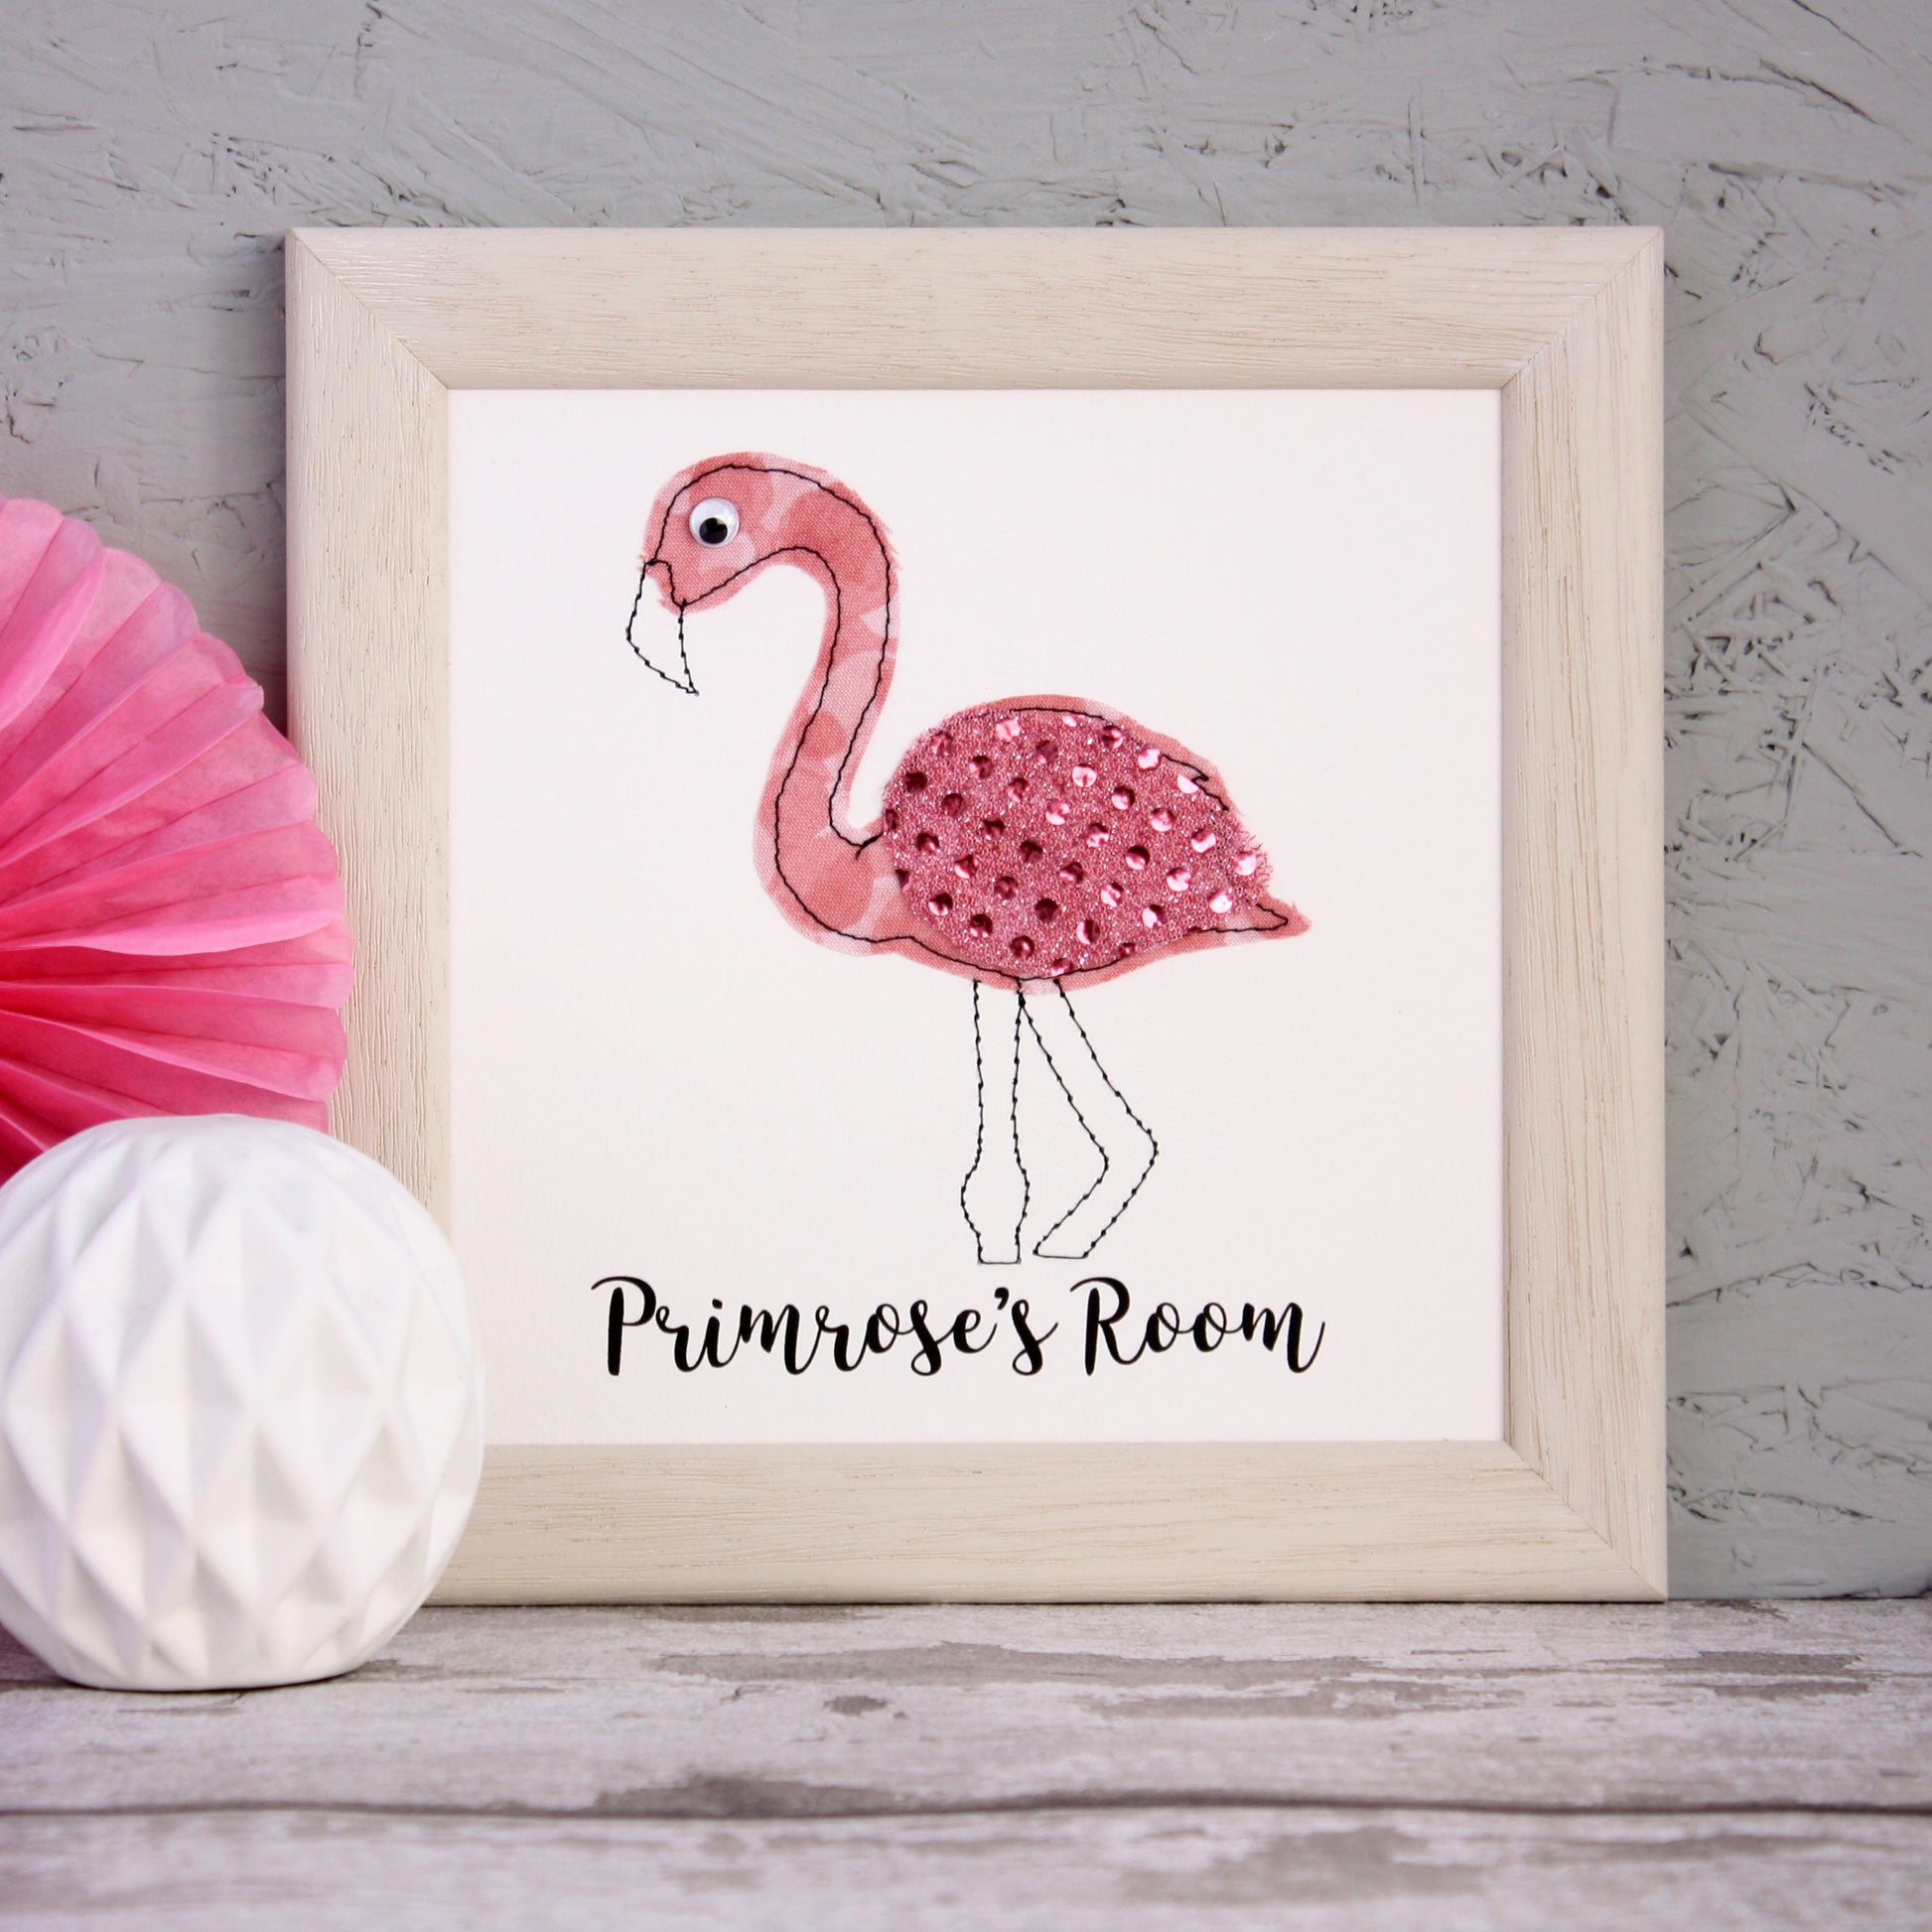 Personalised Flamingo Embroidered Framed Artwork - ZoeGibbons